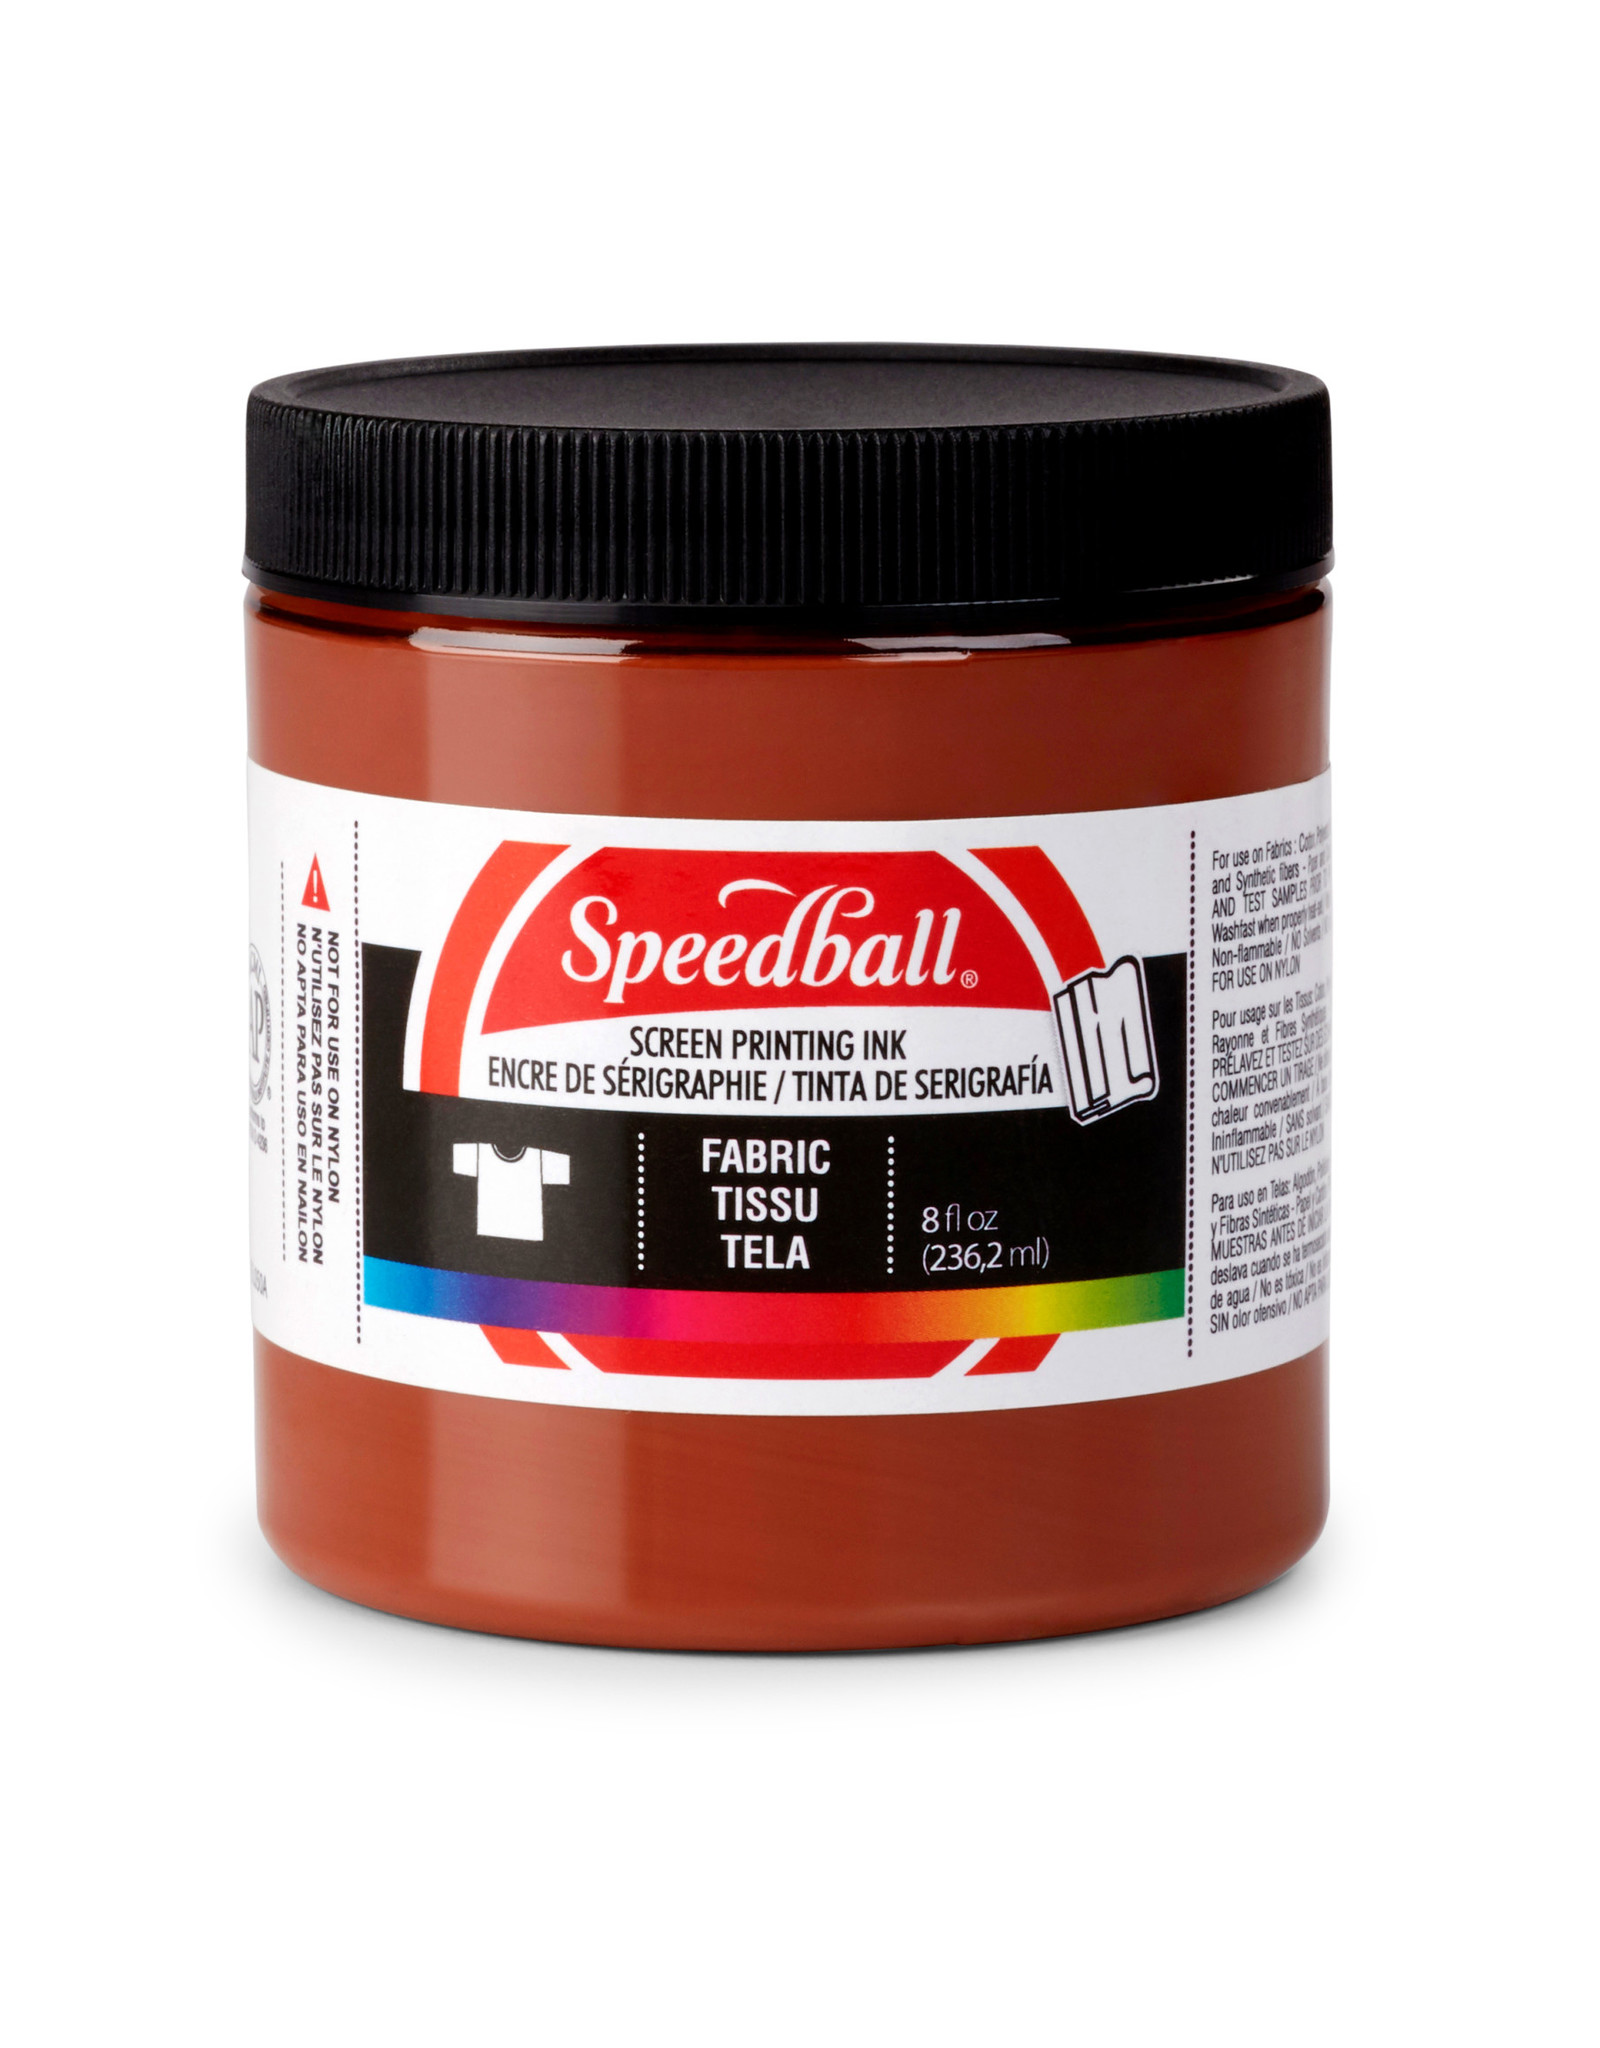 SPEEDBALL ART PRODUCTS Speedball Fabric Screen Printing Ink, Brown, 8oz